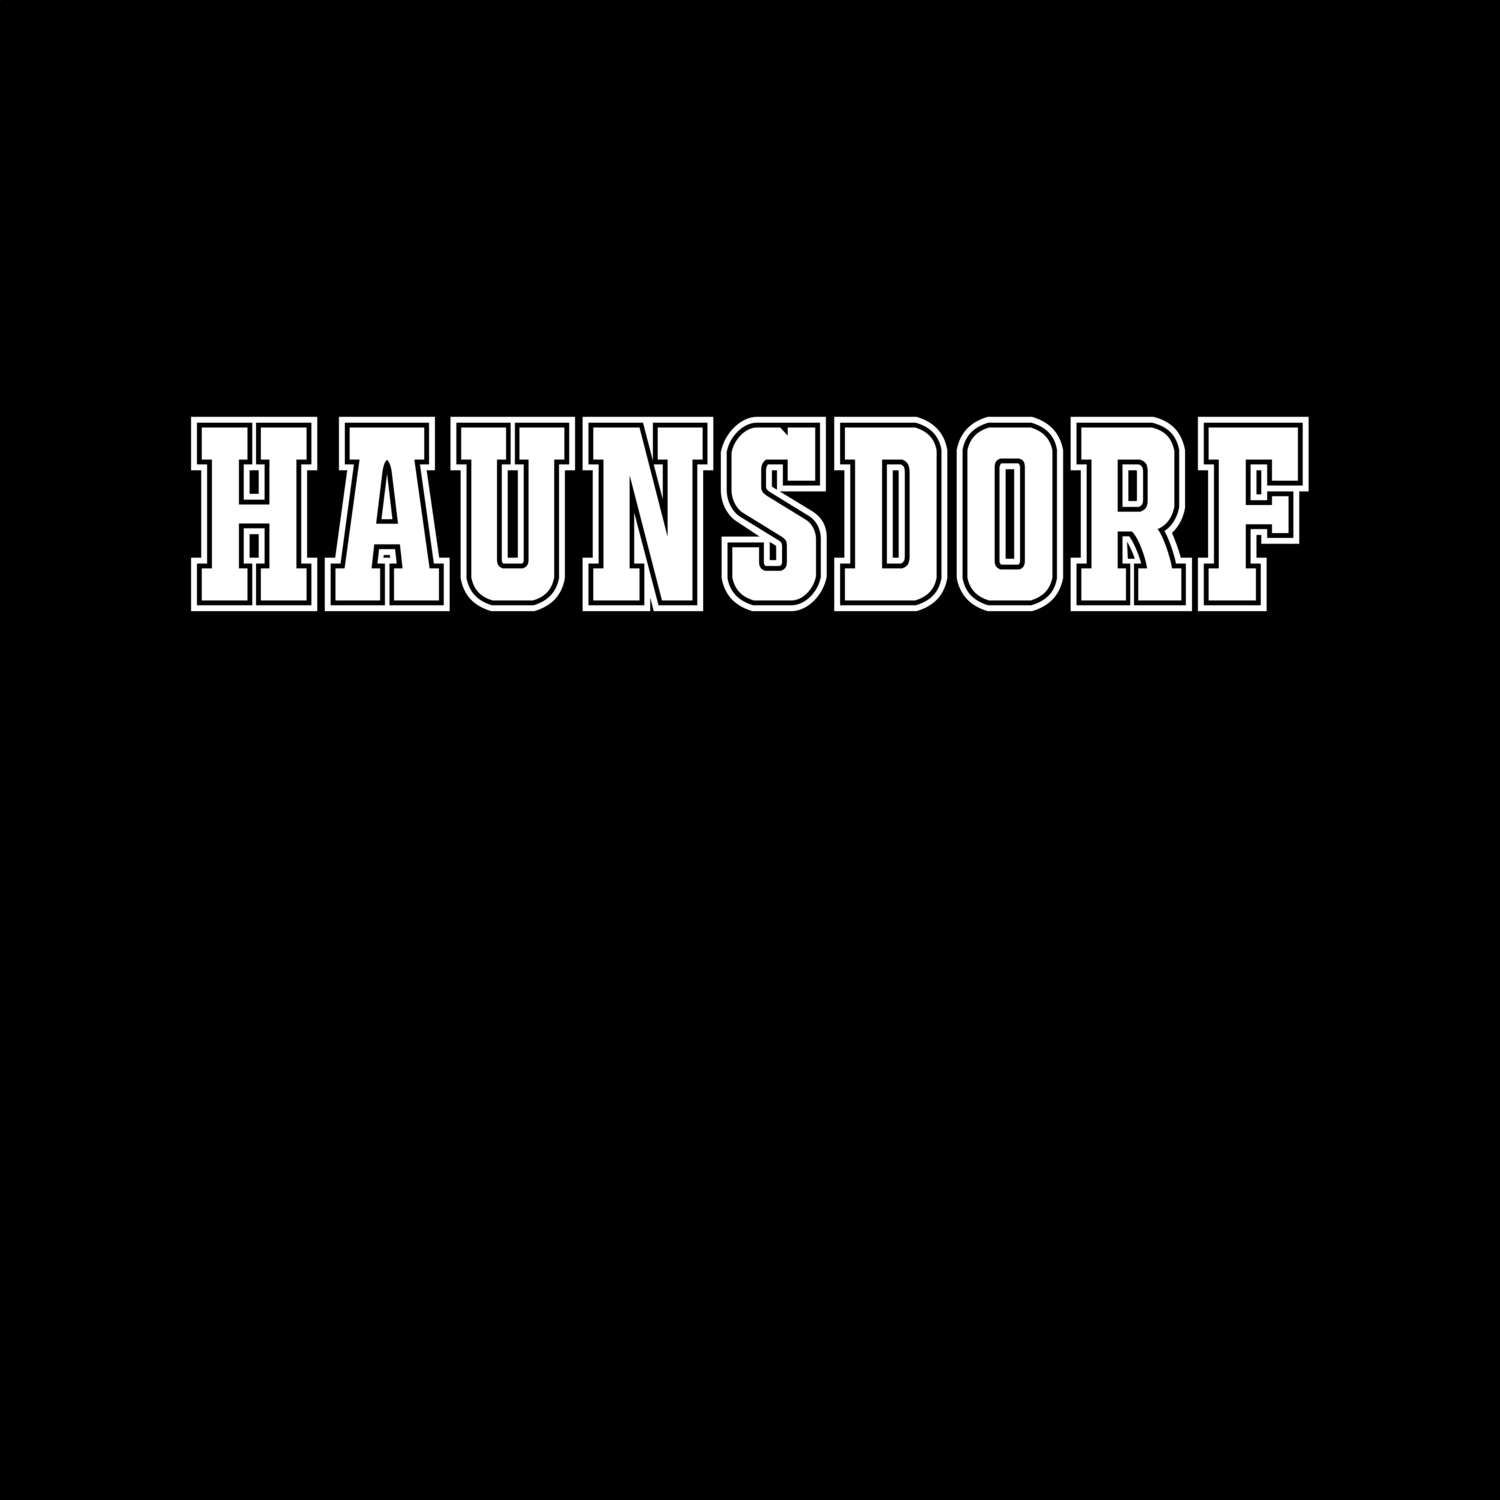 Haunsdorf T-Shirt »Classic«